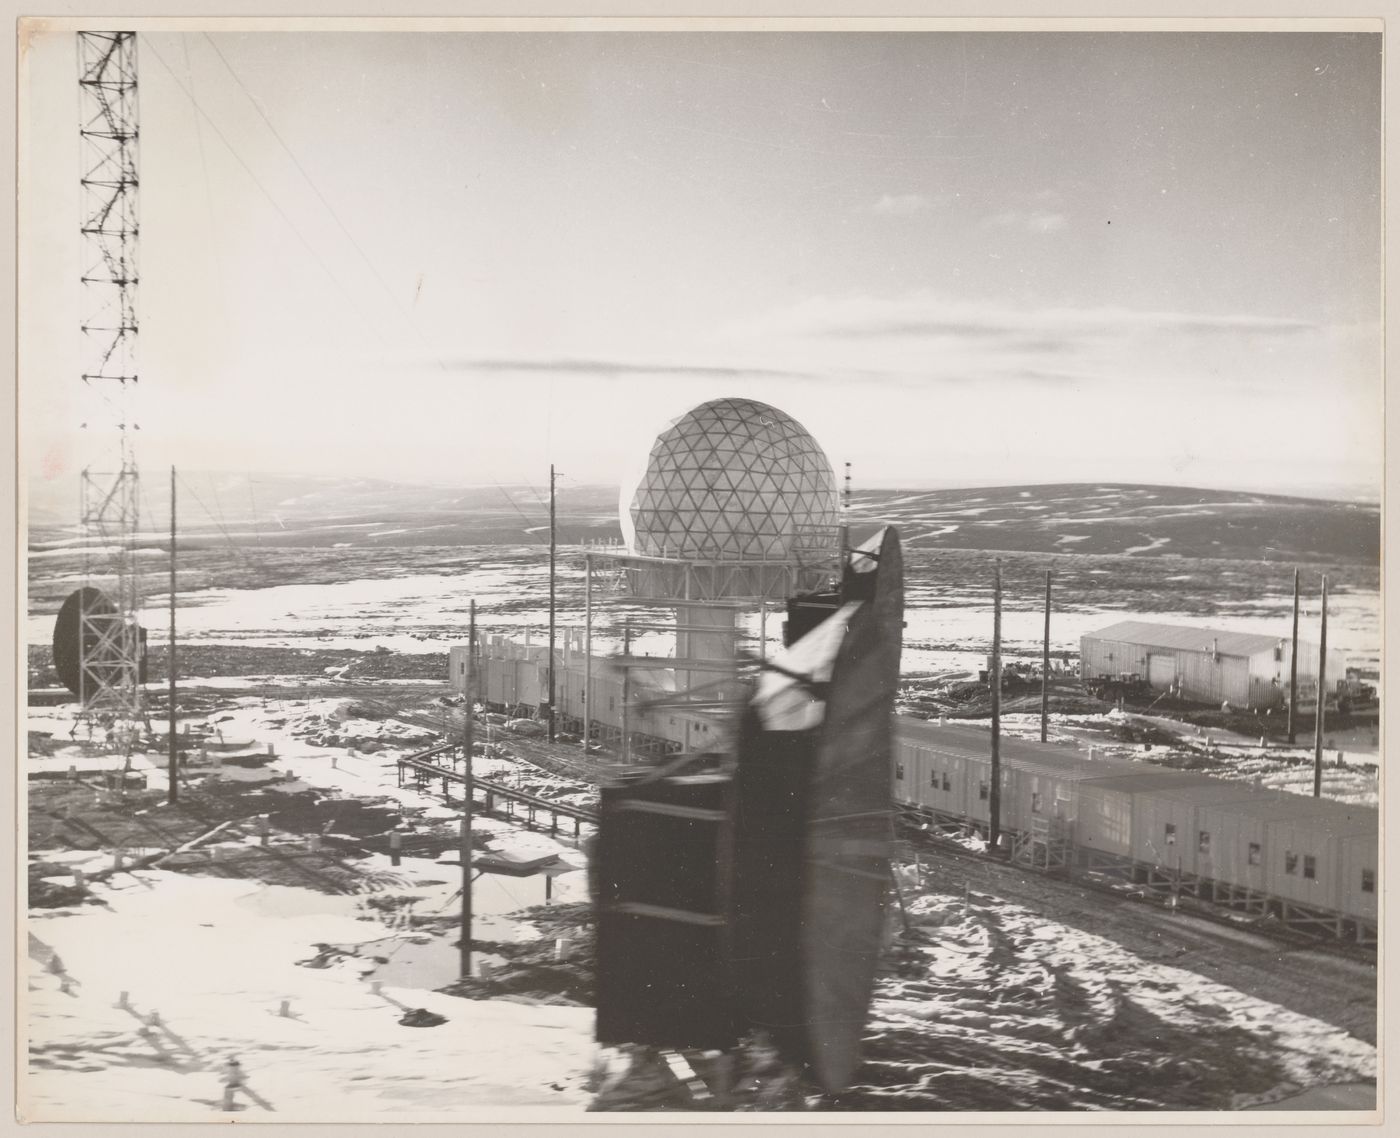 View of DEW Line radar station BAR-3, Tuktoyaktuk, Northwest Territories, Canada